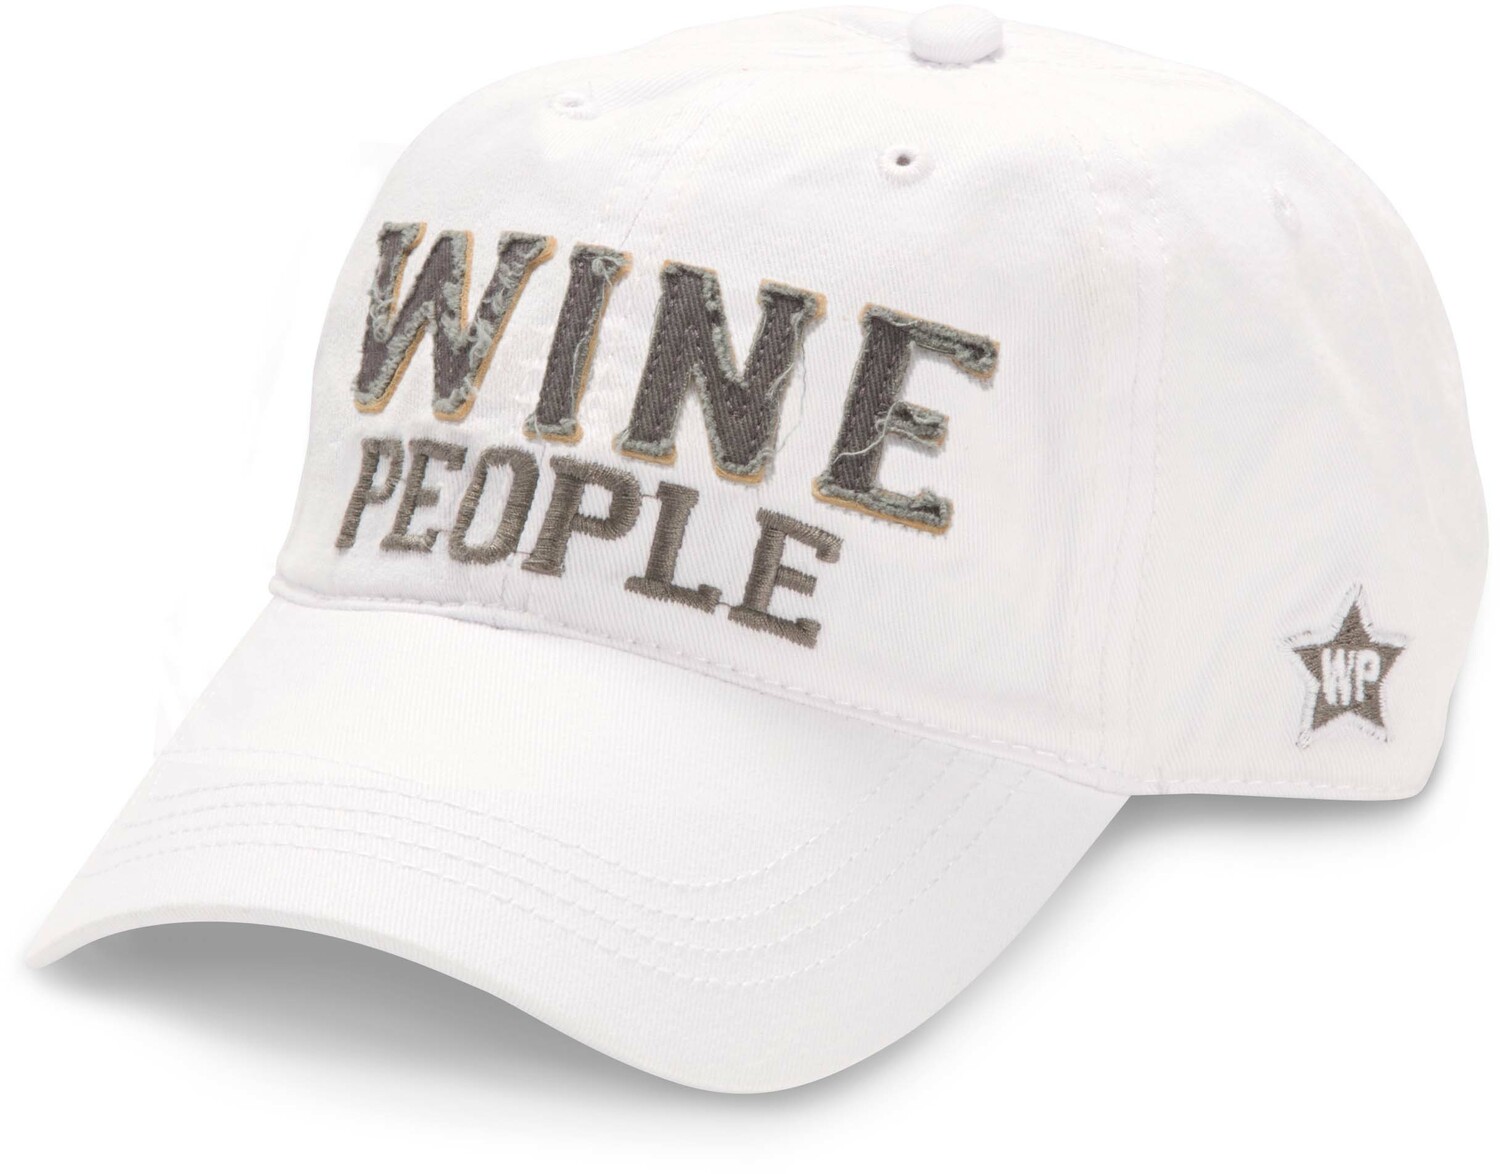 Wine People by We People - Wine People - White Adjustable Hat